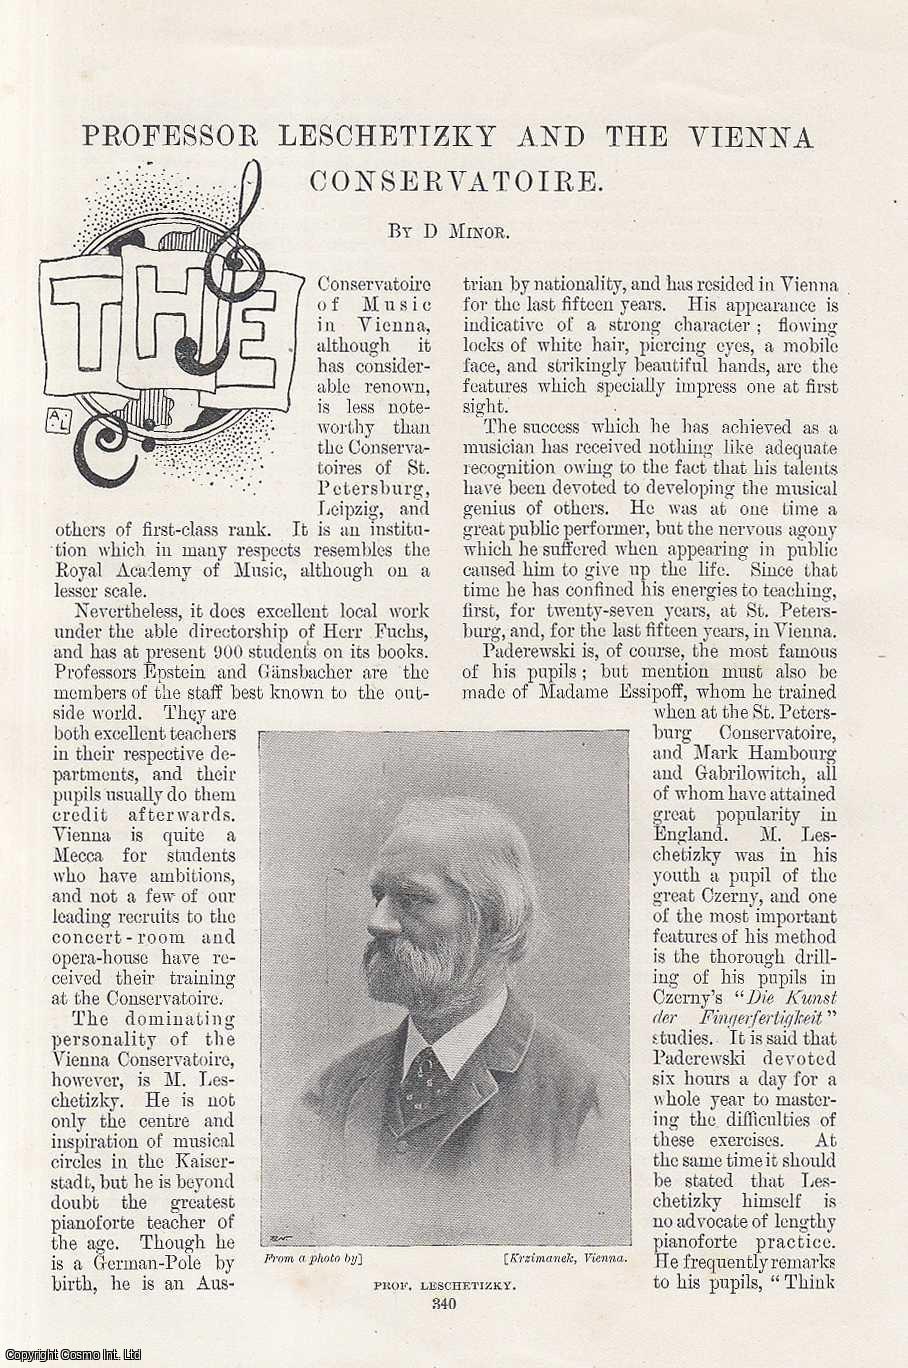 D. Minor - Professor Leschetizky and The Vienna Conservatoire of Music. An original article from the Windsor Magazine, 1898.